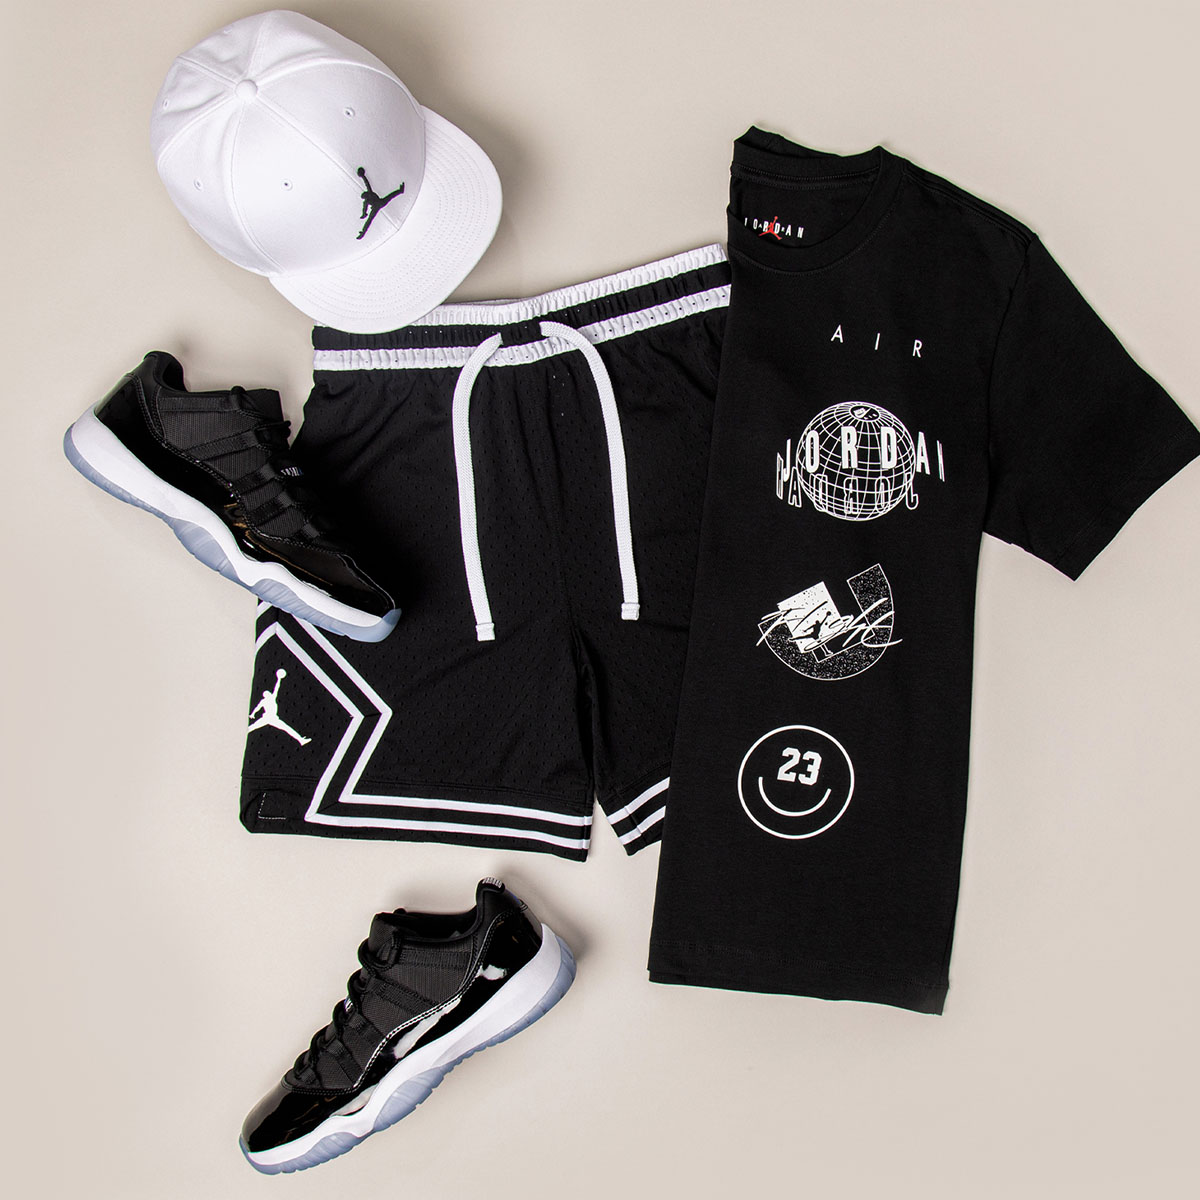 Air Jordan 11 Low Space Jam Black White Hat Shirt Shorts Outfit 1